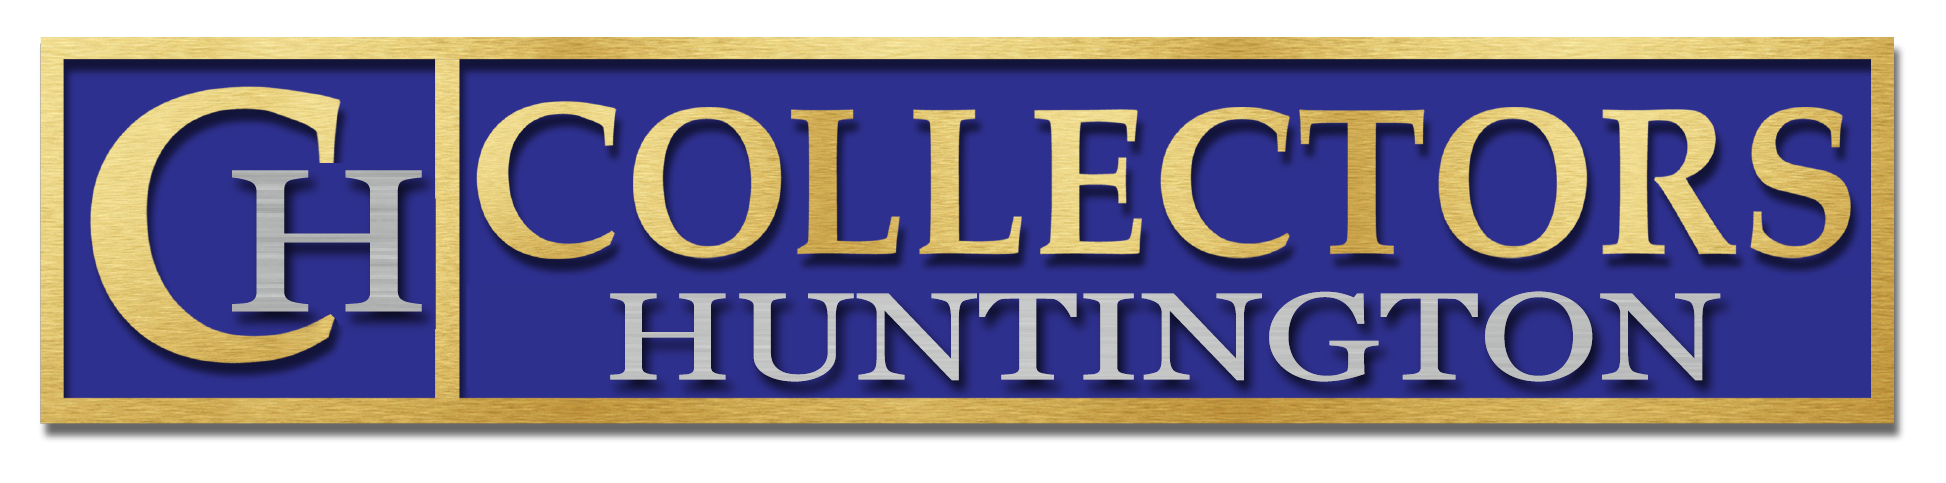 Collectors Huntington Logo 